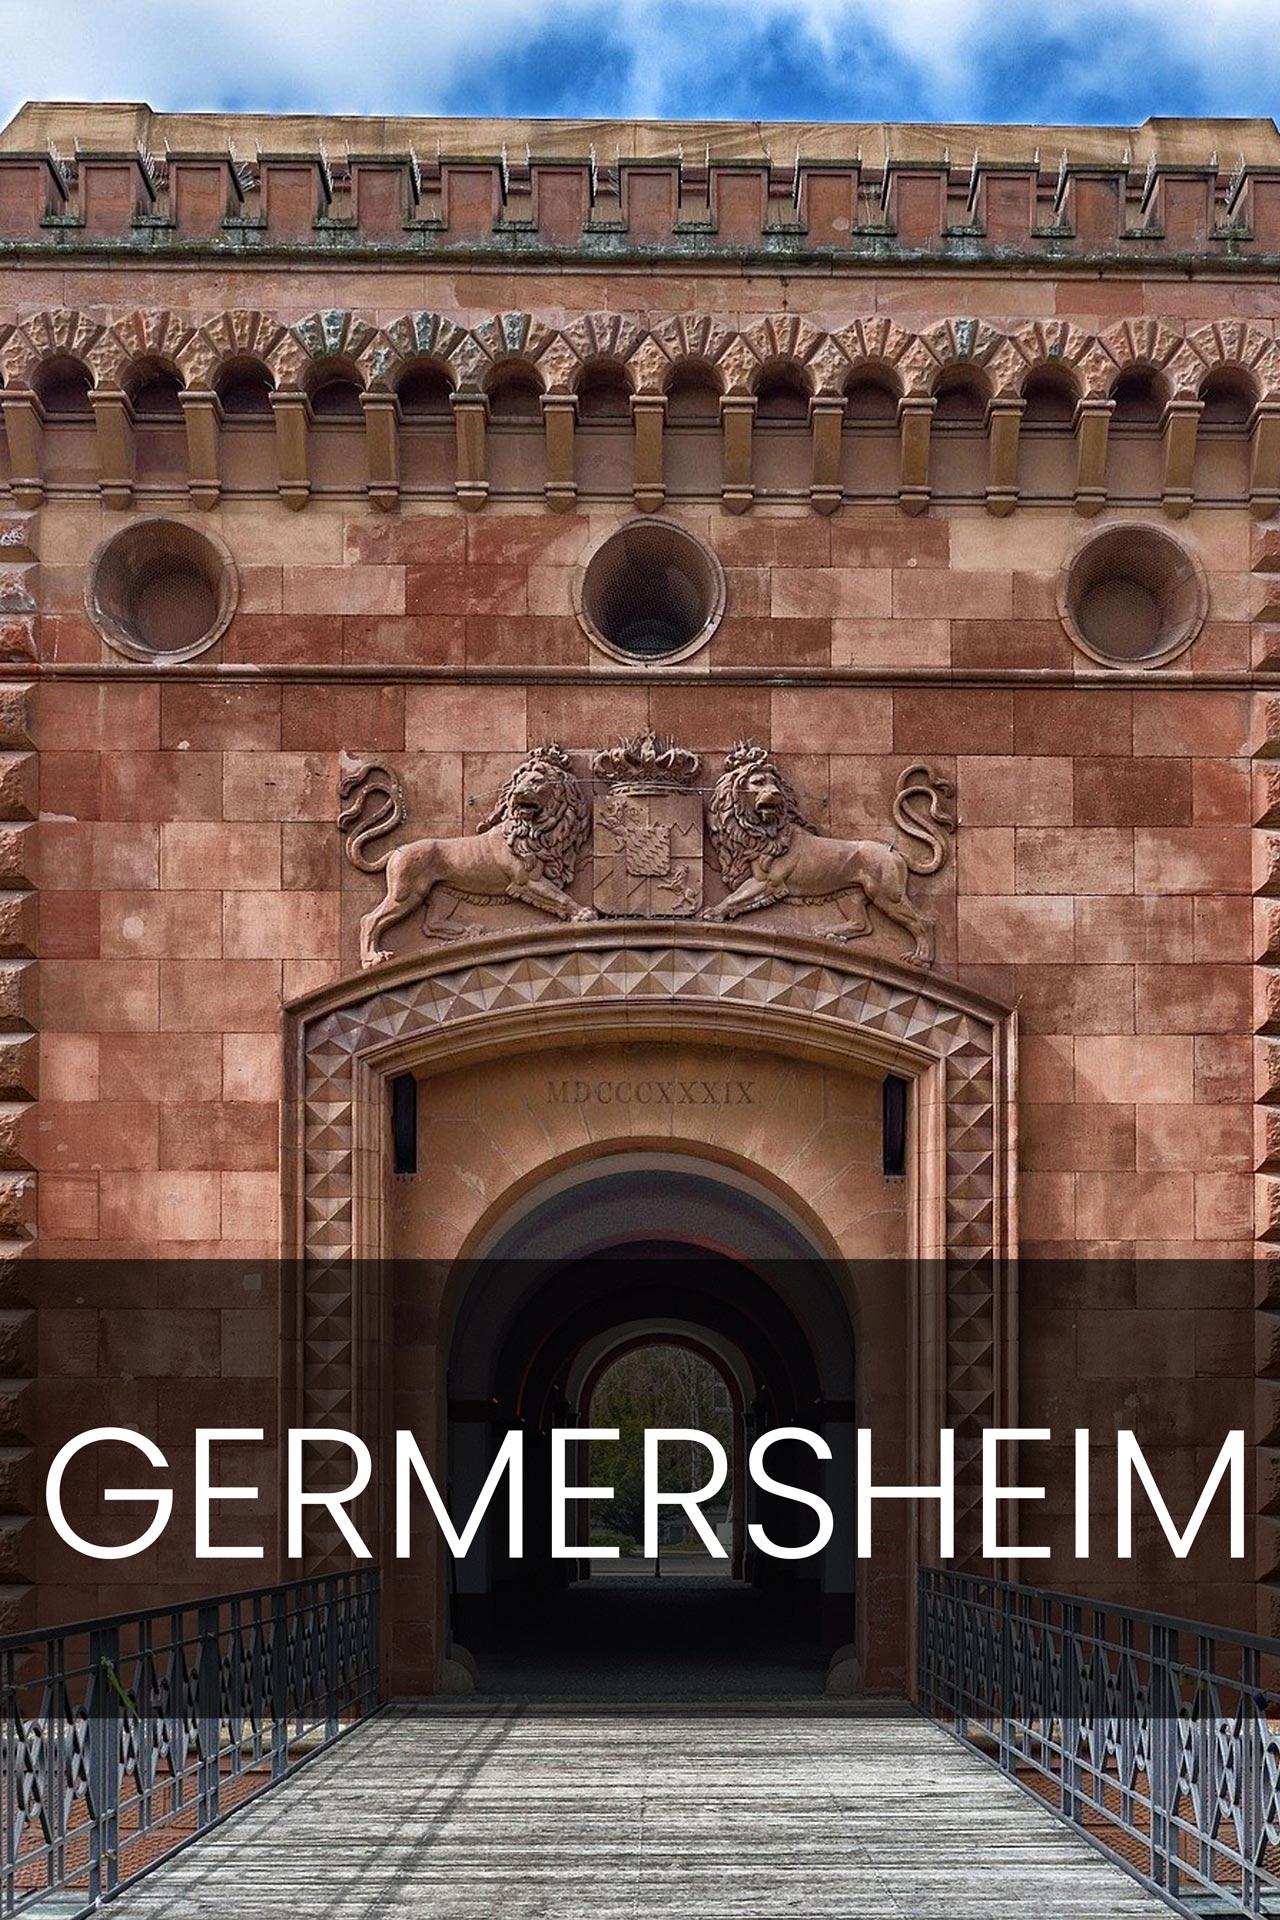 Germersheim